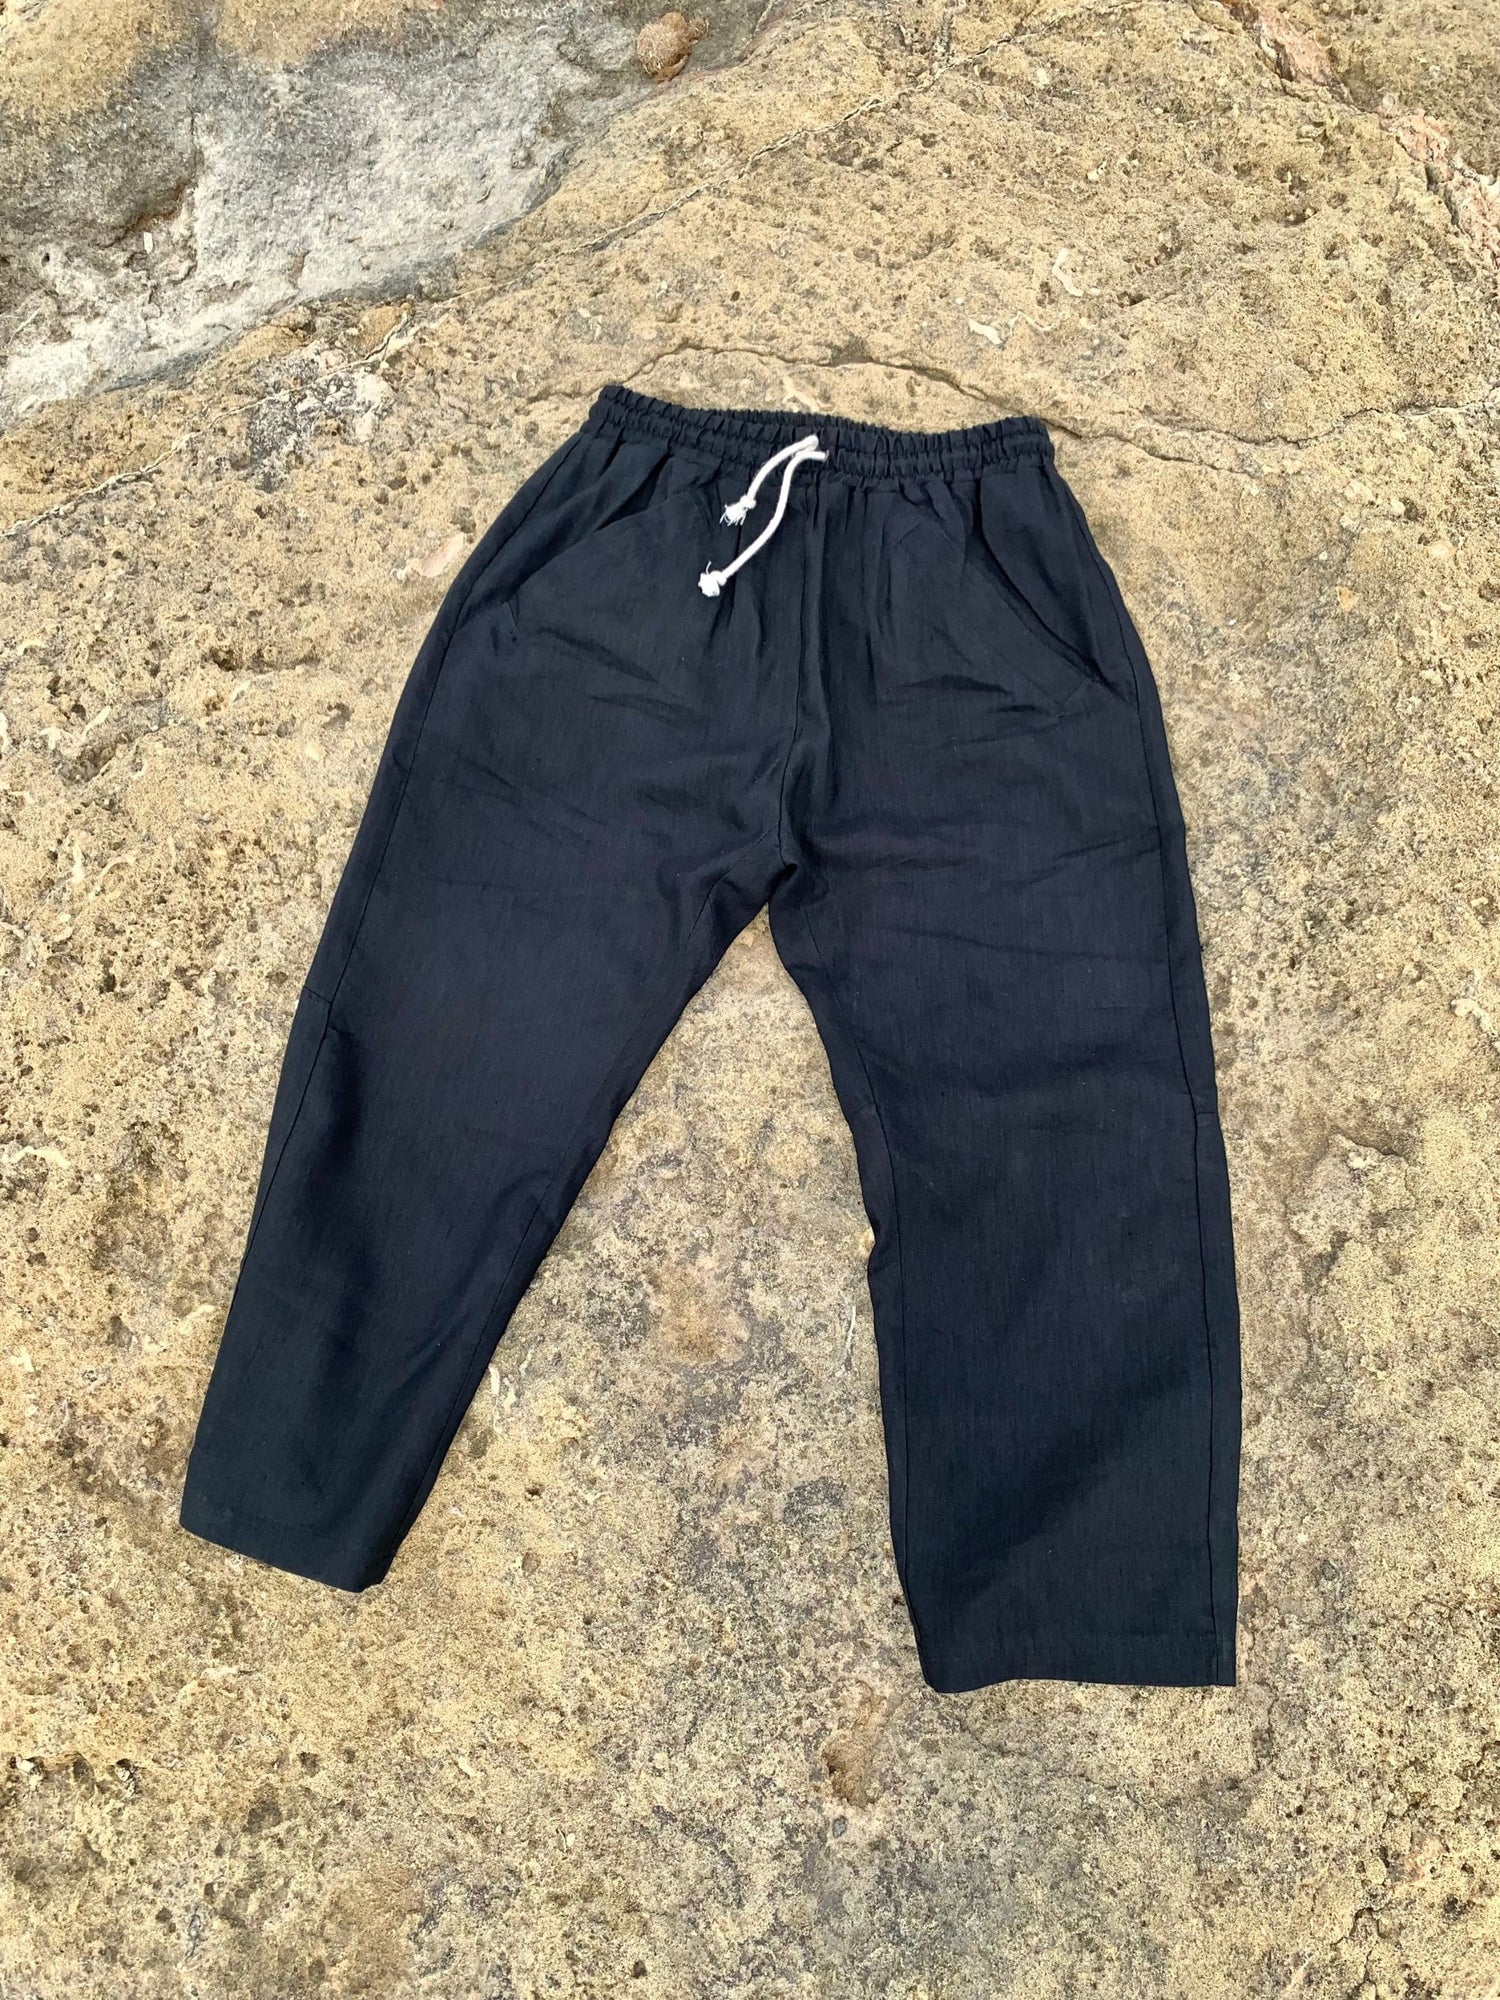 Magata natural linen unisex drawstring Capri pants black